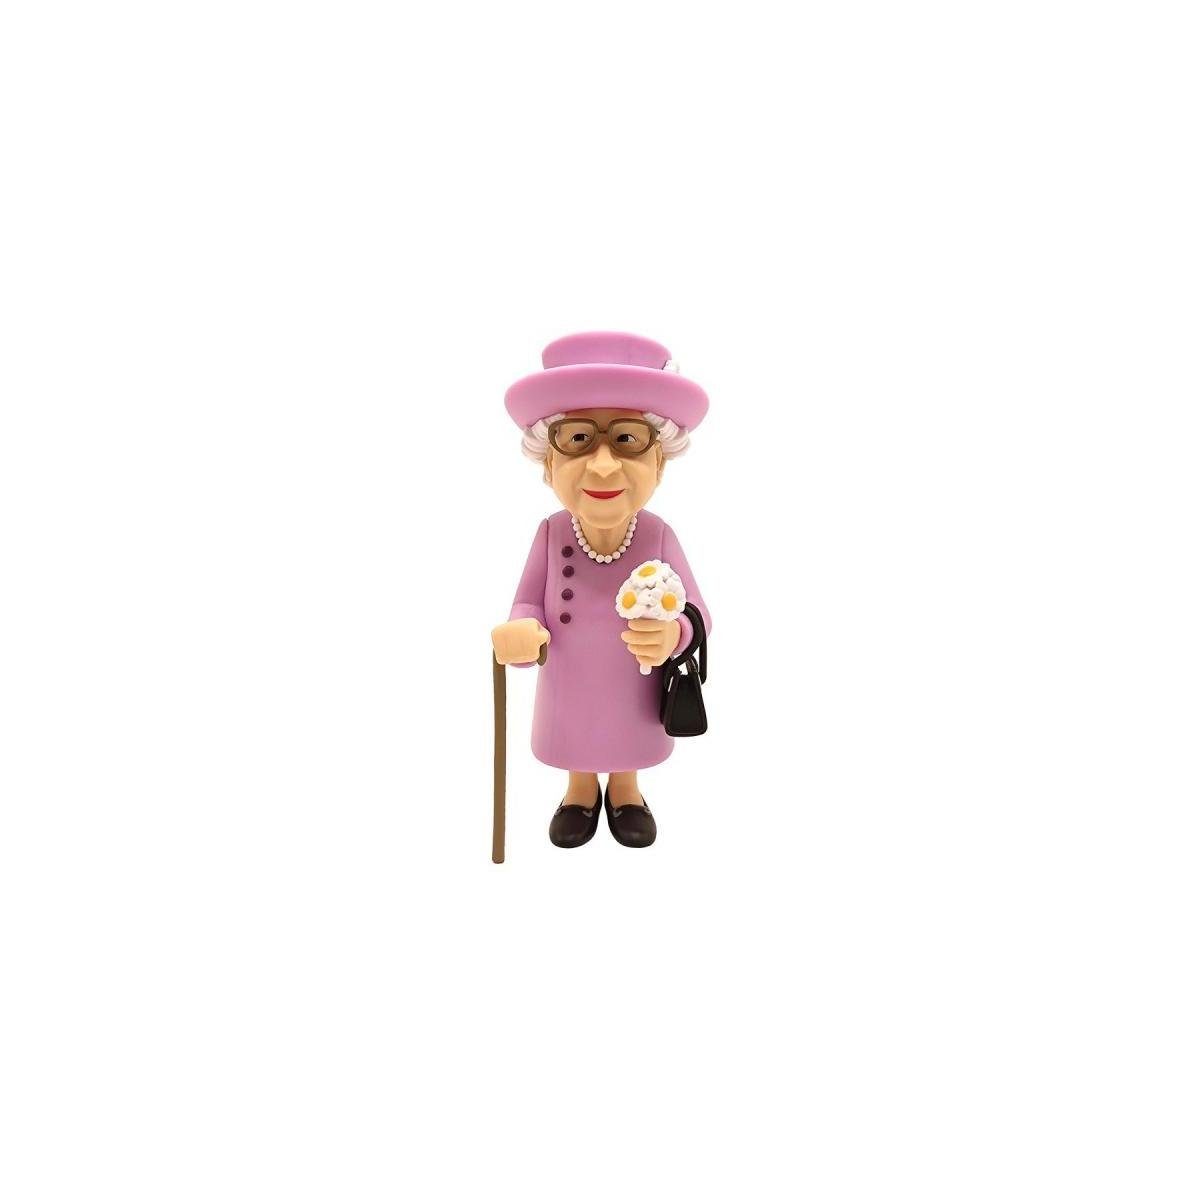 Minix Merchandise-Figur MIND0043 - Sammelfigur Queen Elizabeth II